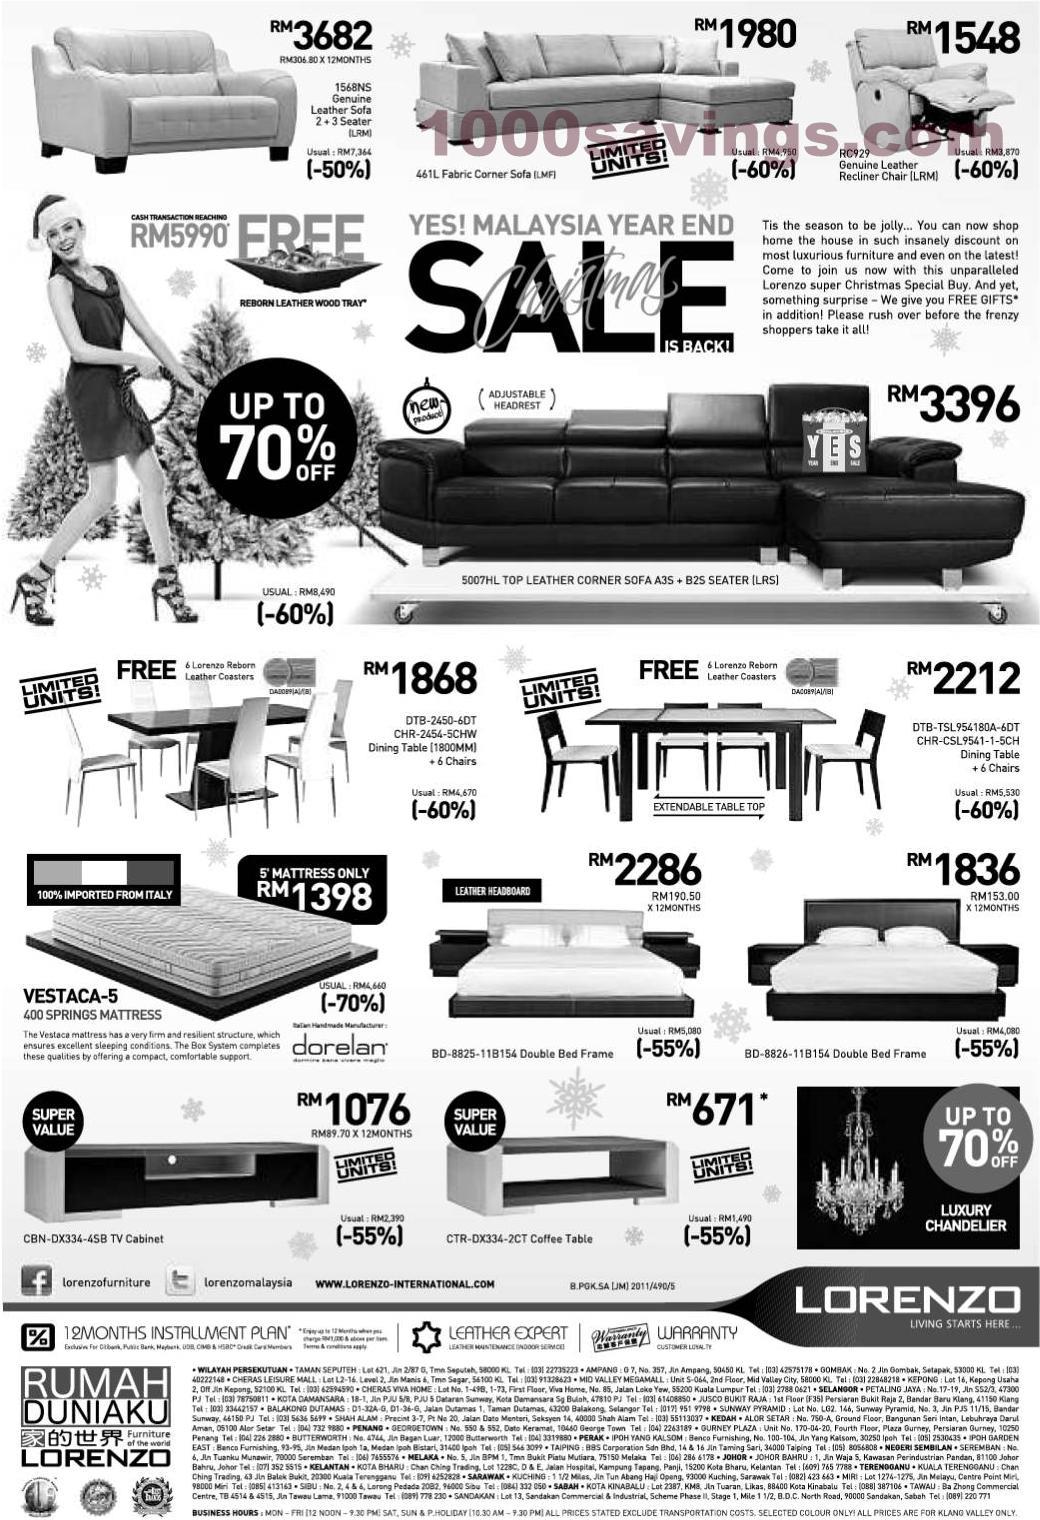 Lorenzo Malaysia Year End Sale 2011 | 1000Savings.com